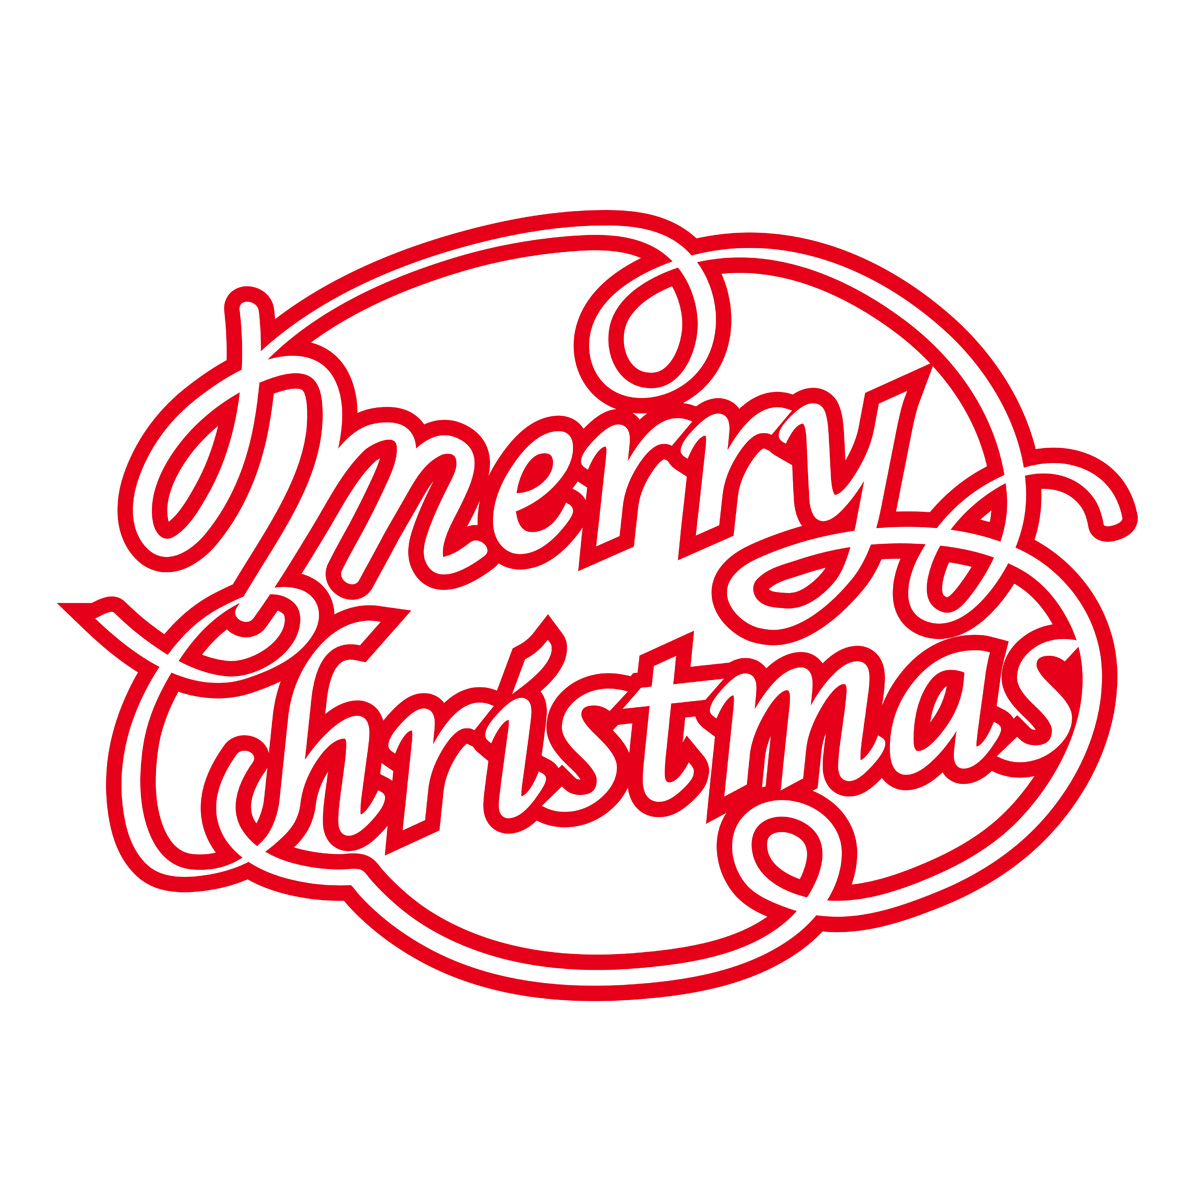 Merry Christmas logo design, vector illustration 